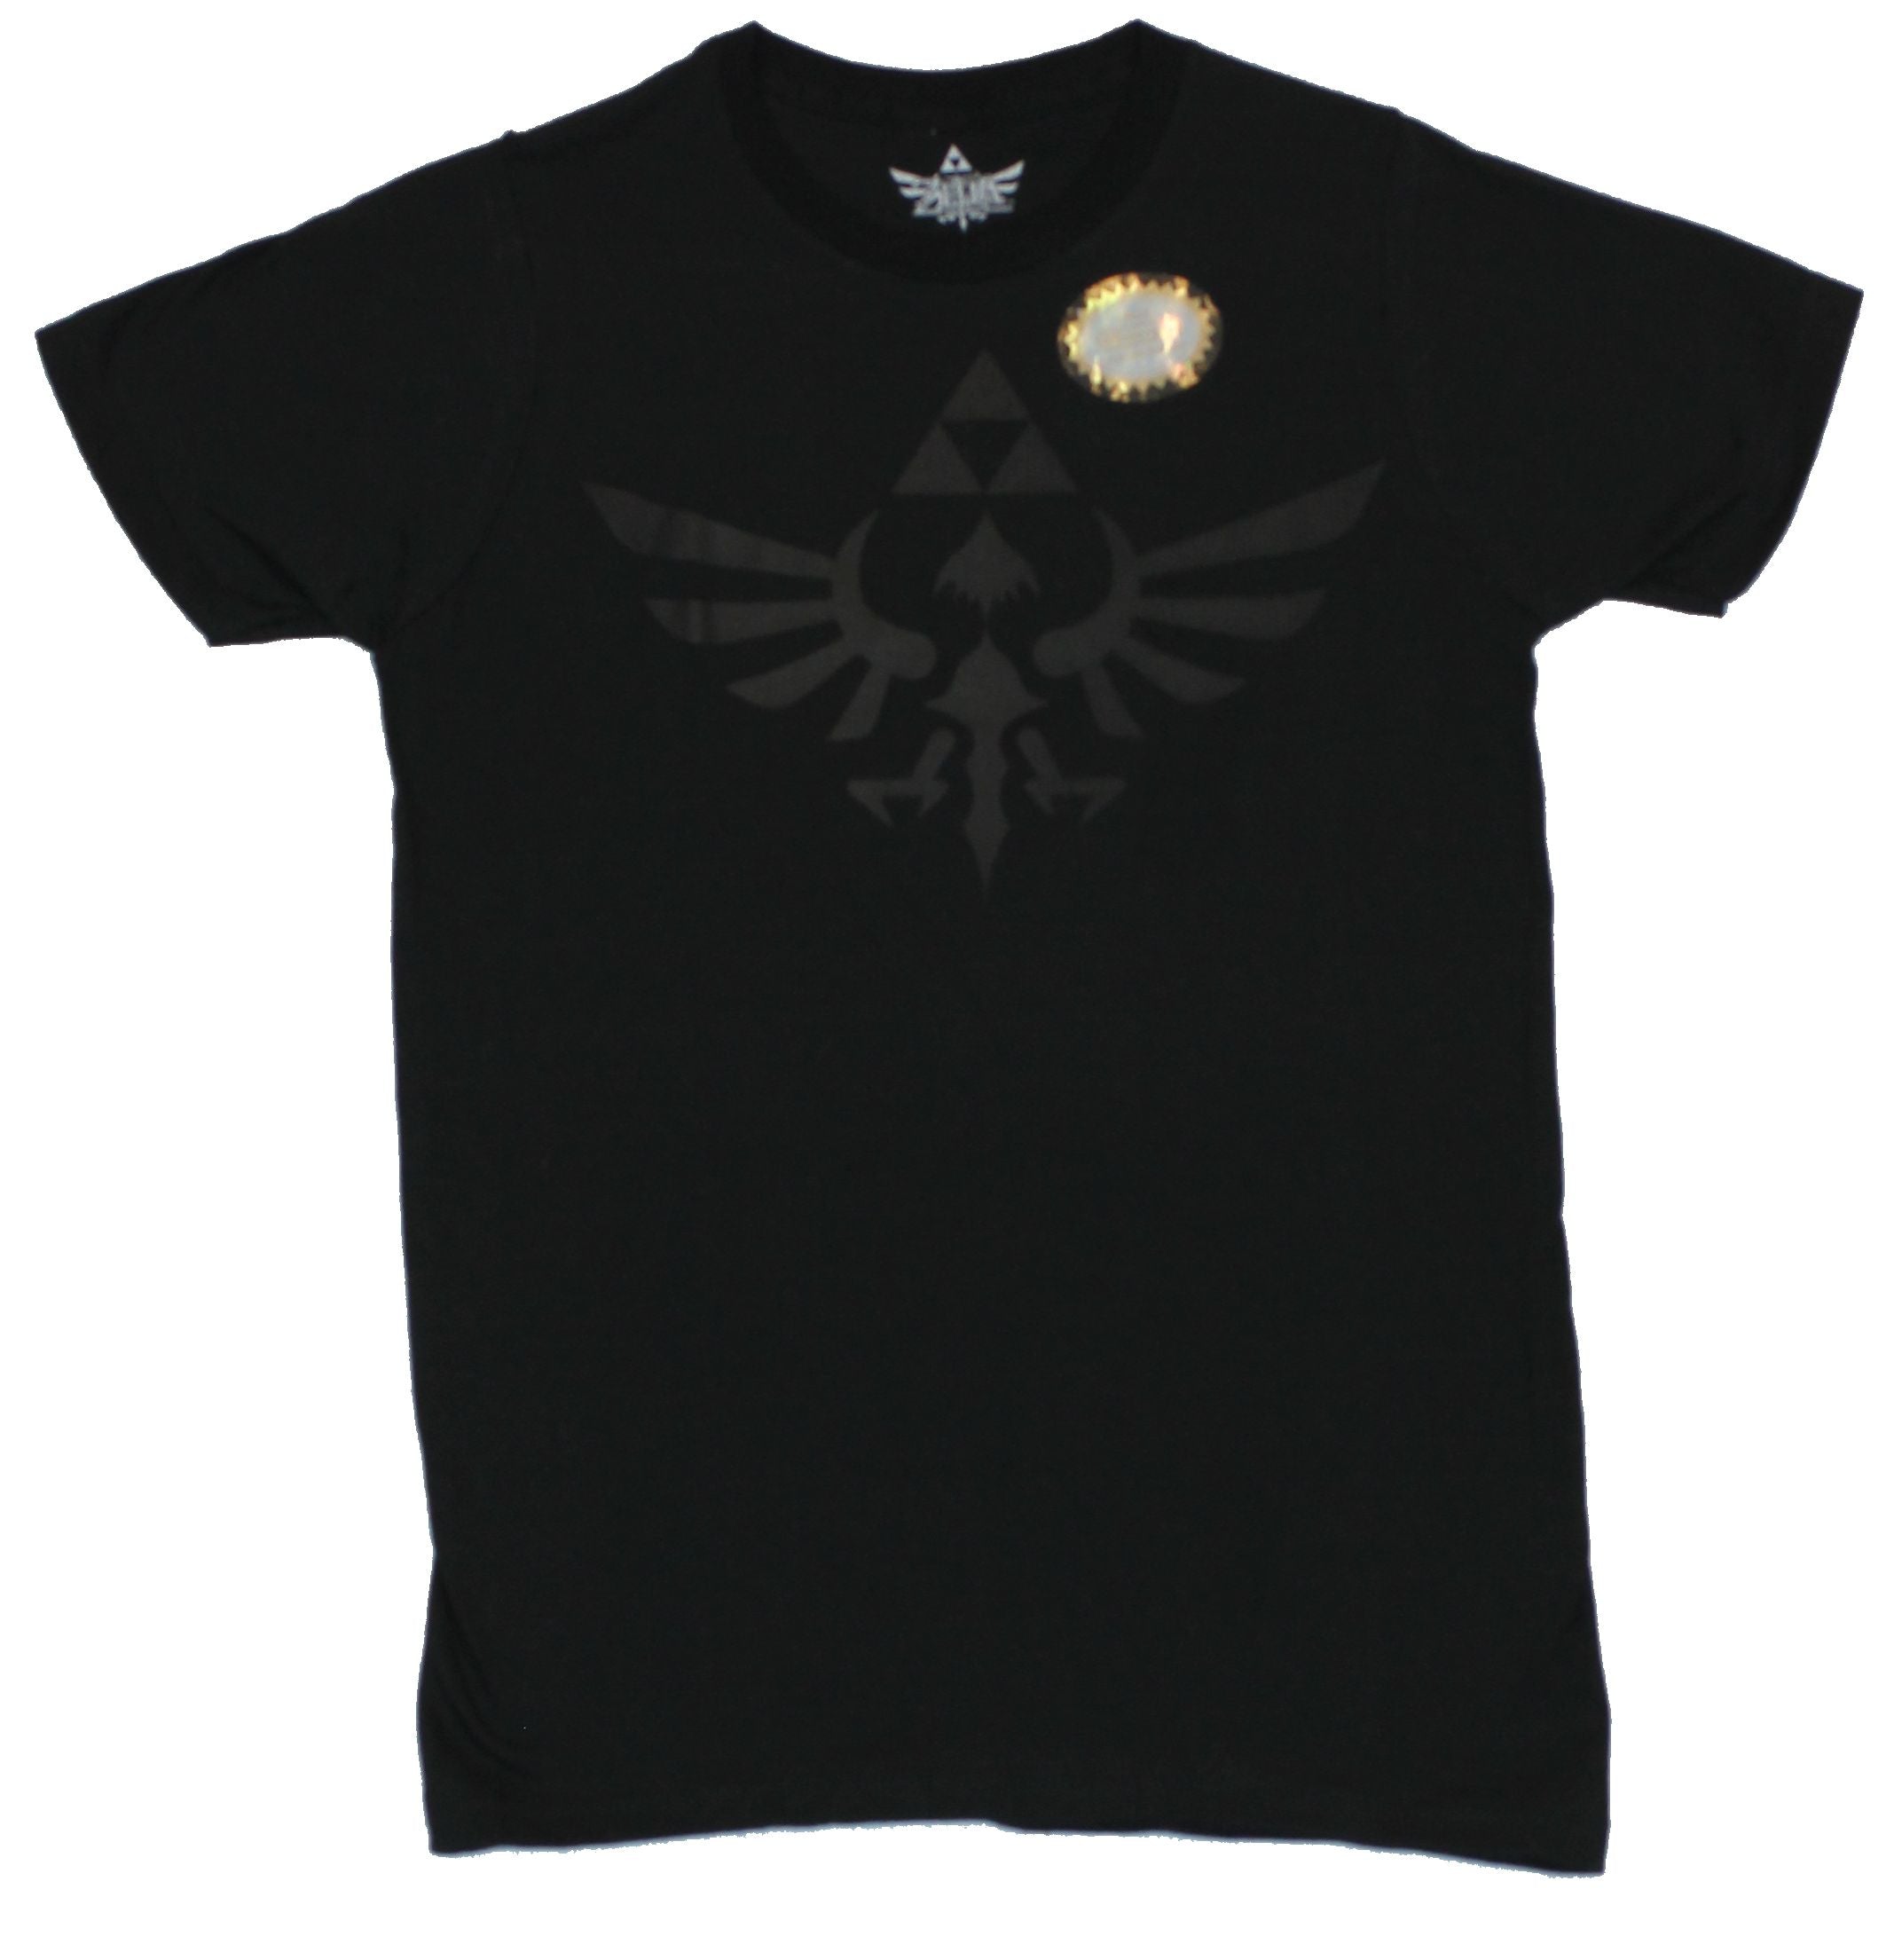 The Legend of Zelda Mens T-Shirt -Classic Black Tri-force Image